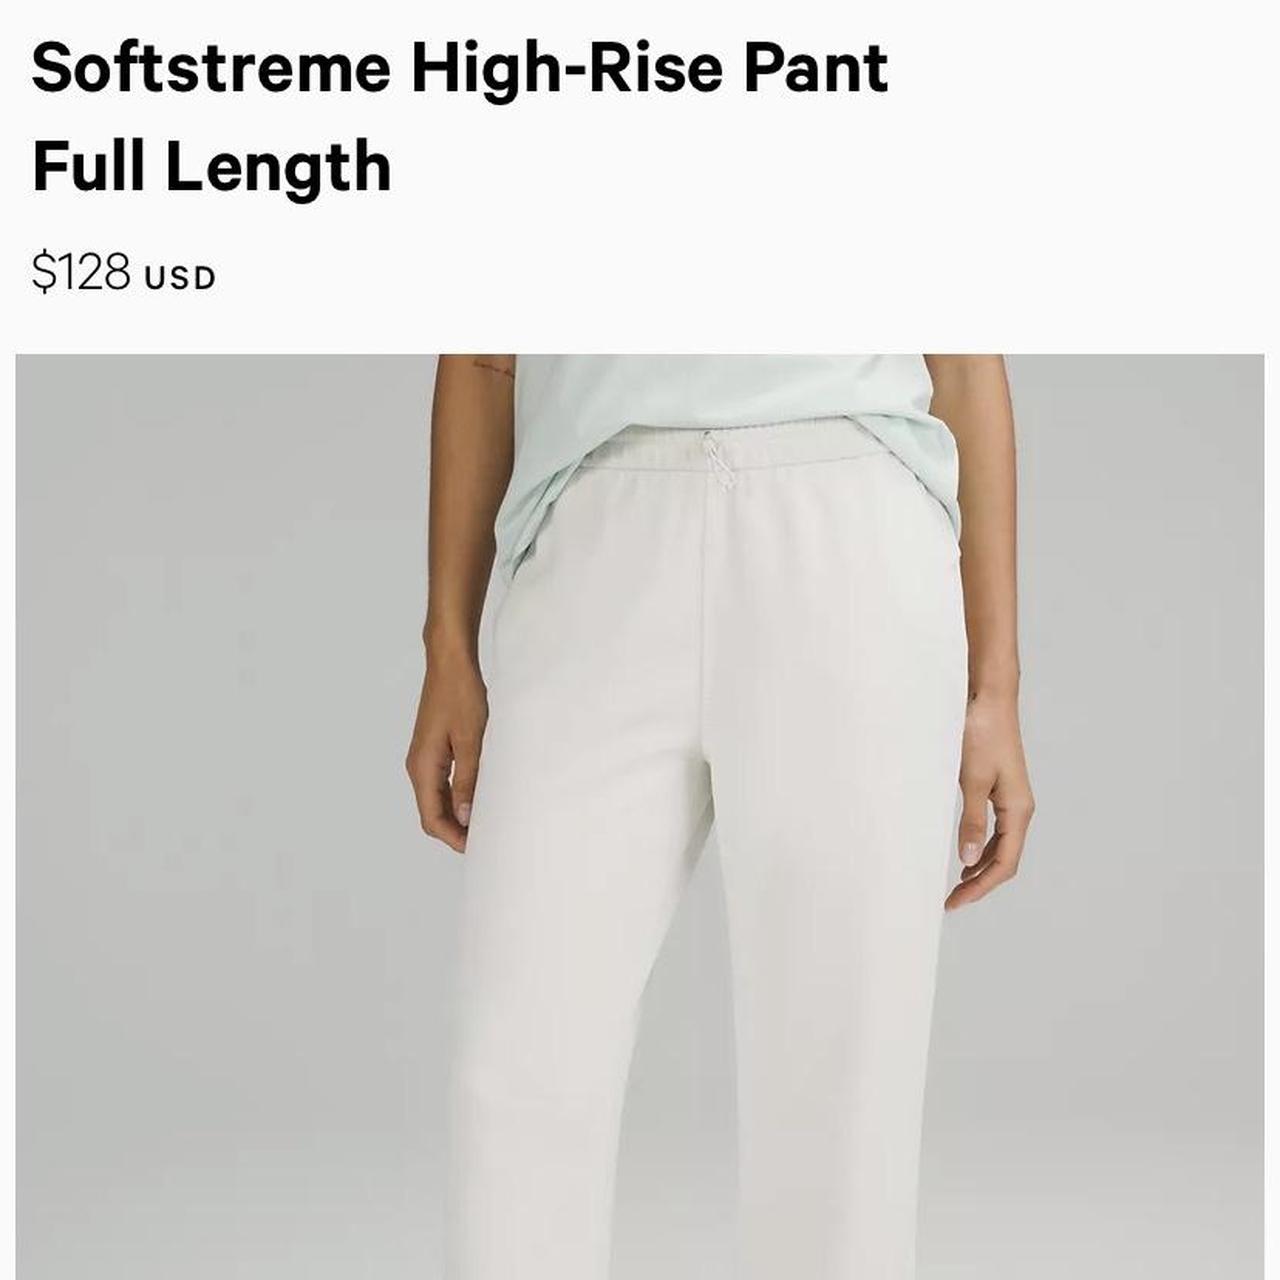 Lululemon softstreme high rise pants , Size 8 , Can